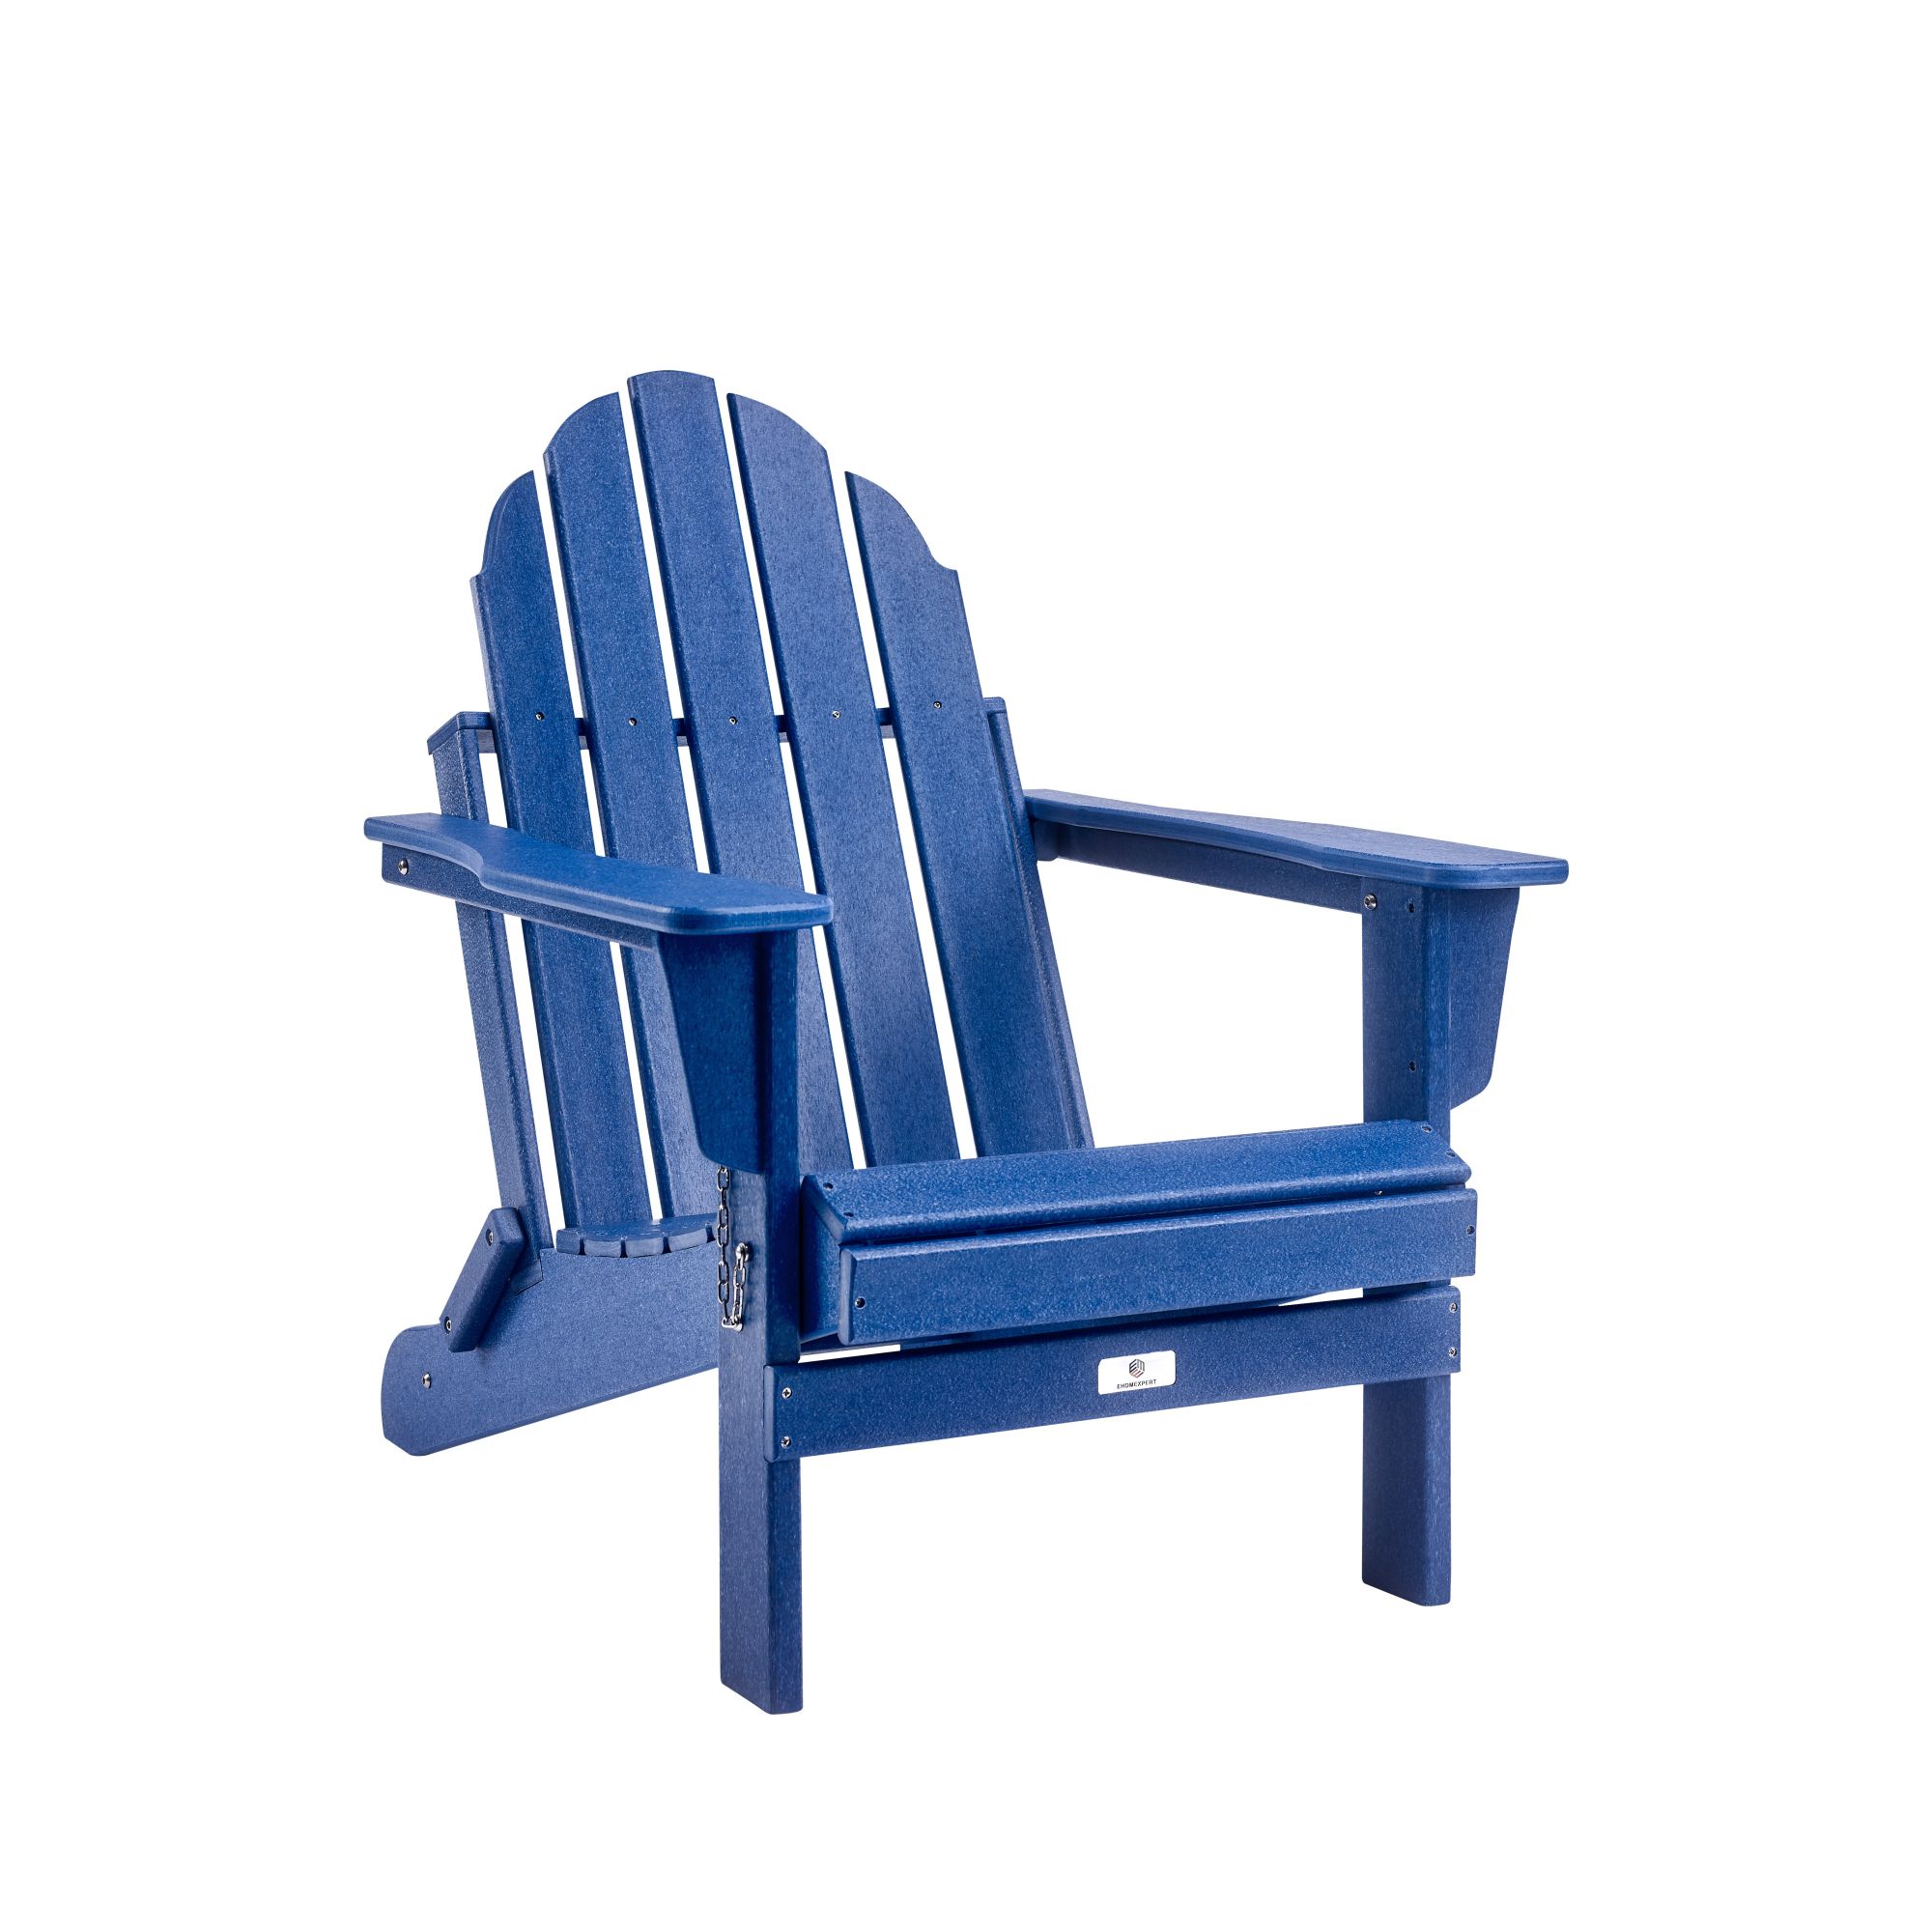 Casainc Classic Outdoor Adirondack Chair for Garden Porch Patio Deck Backyard, Weather Resistant Accent Furniture-CASAINC